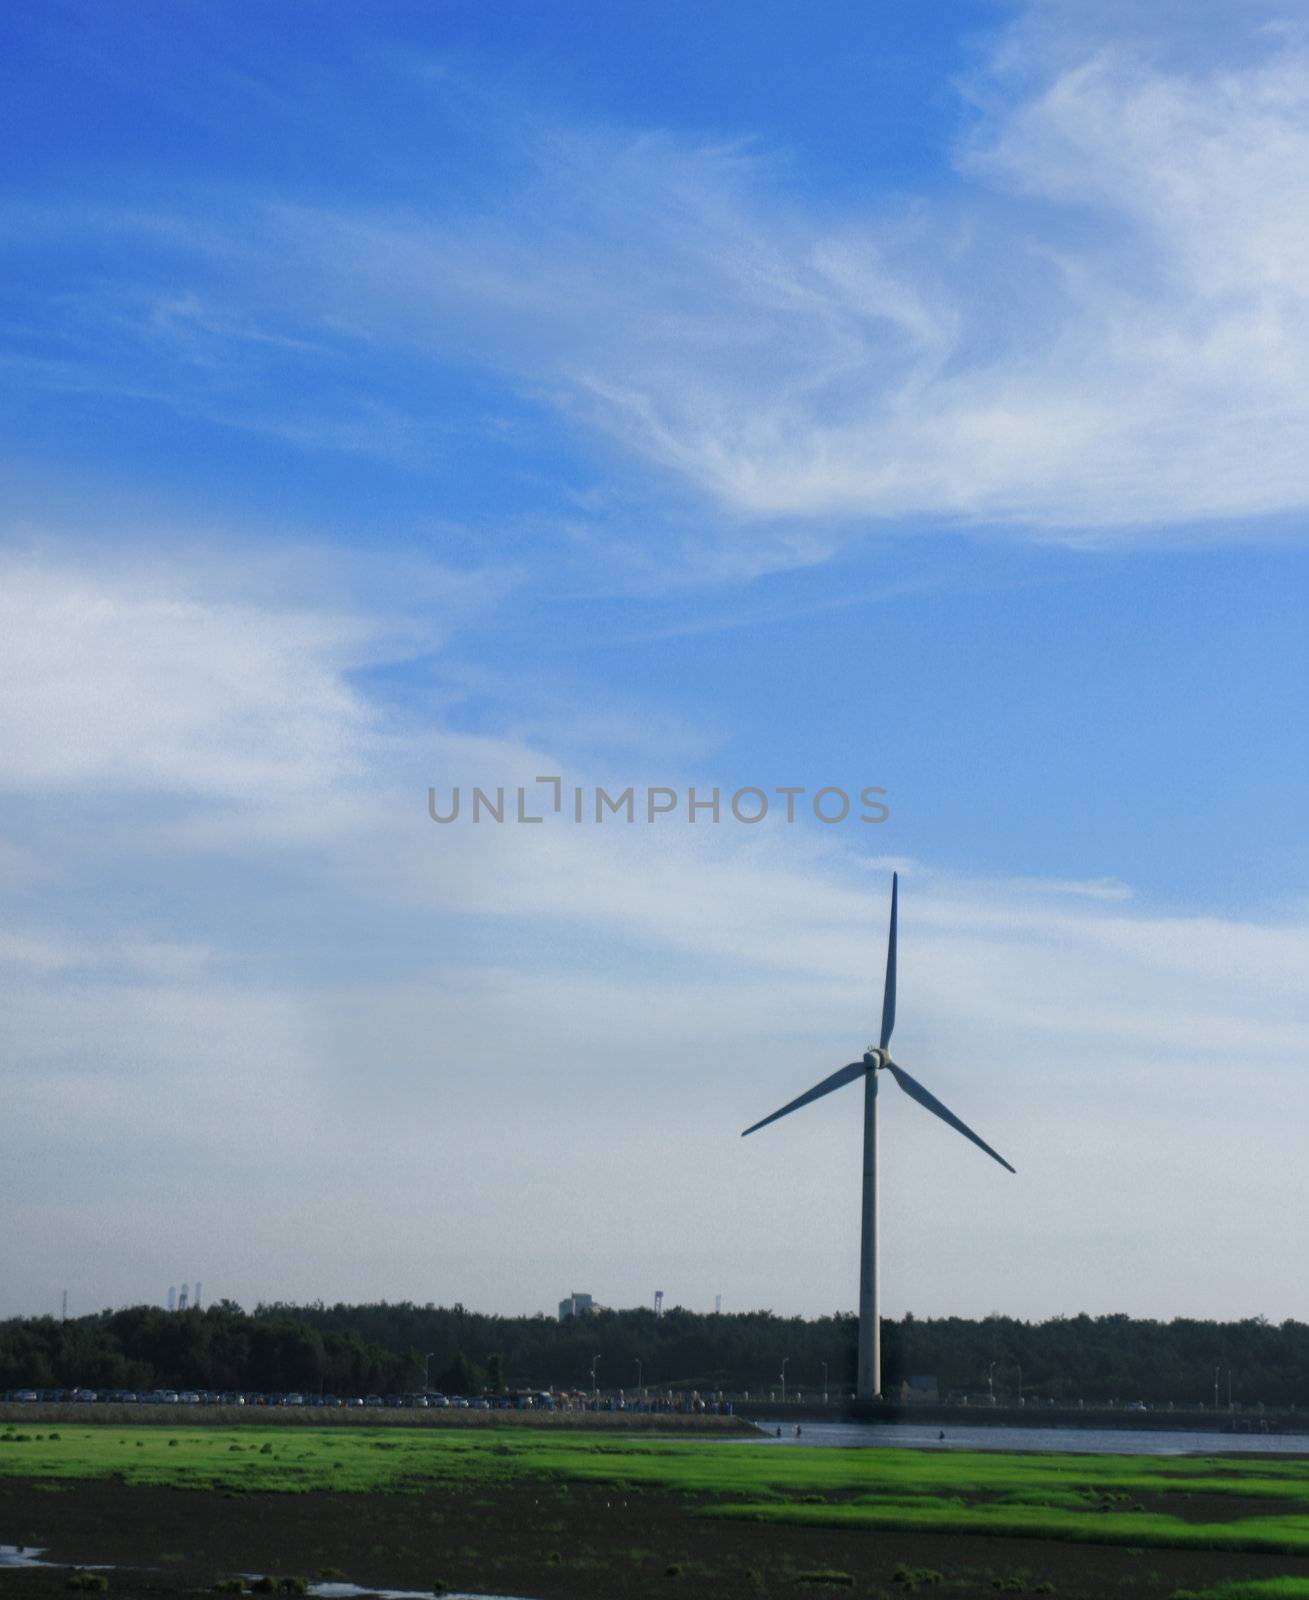 Wind turbines in seacoast